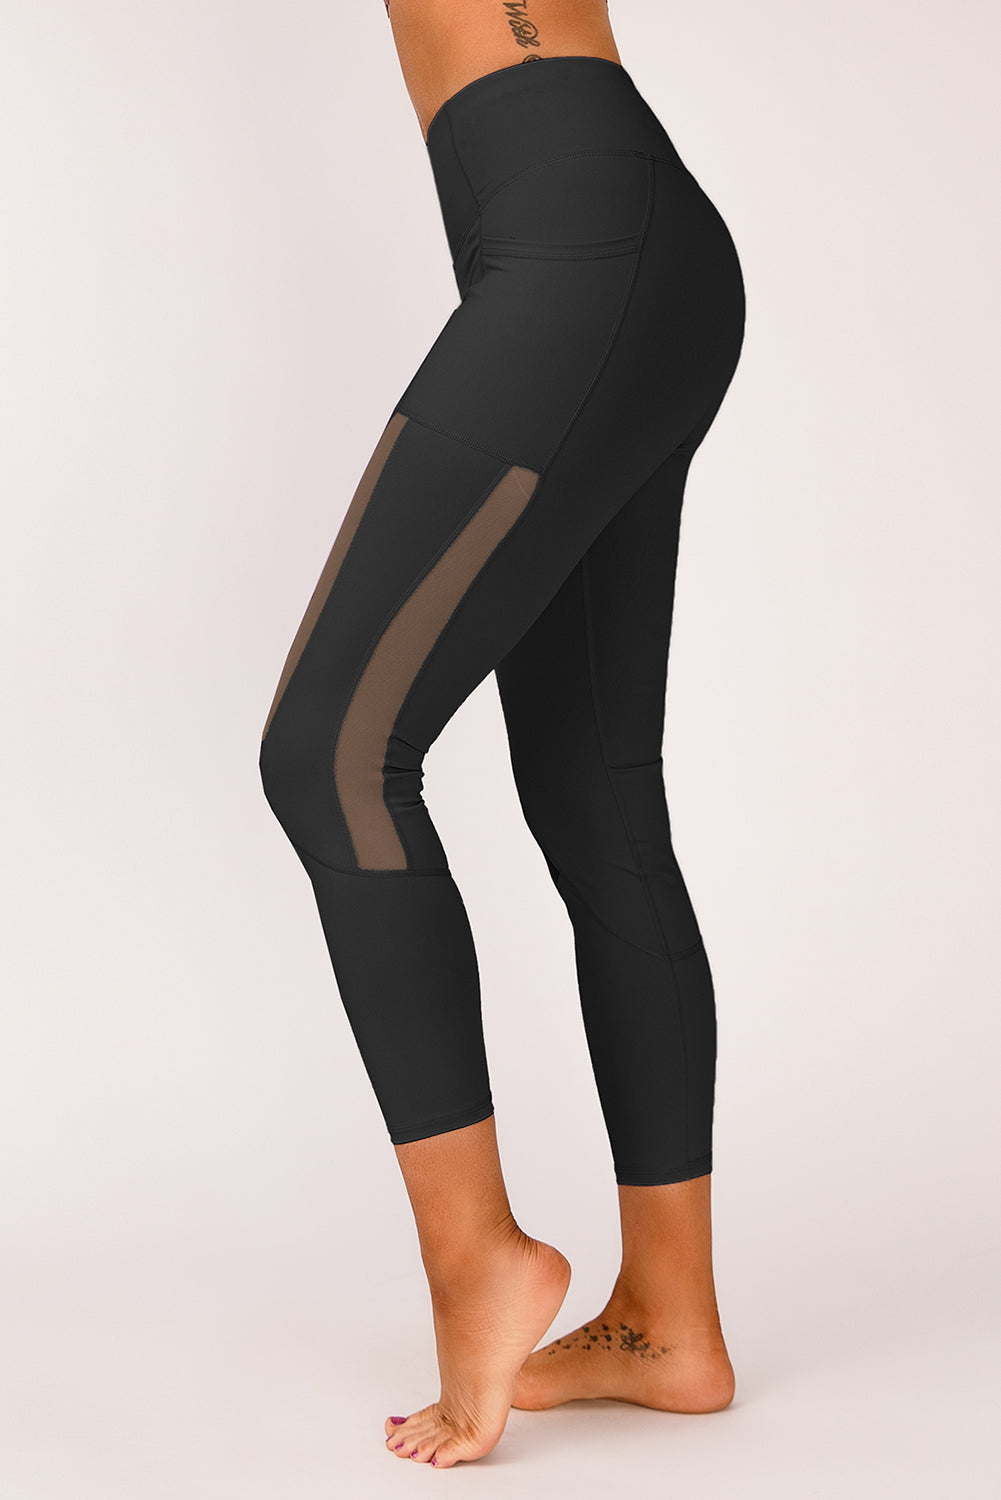 Black Mesh Side Splicing High Waist Yoga Sports Leggings with Phone Pocket - EBEPEX